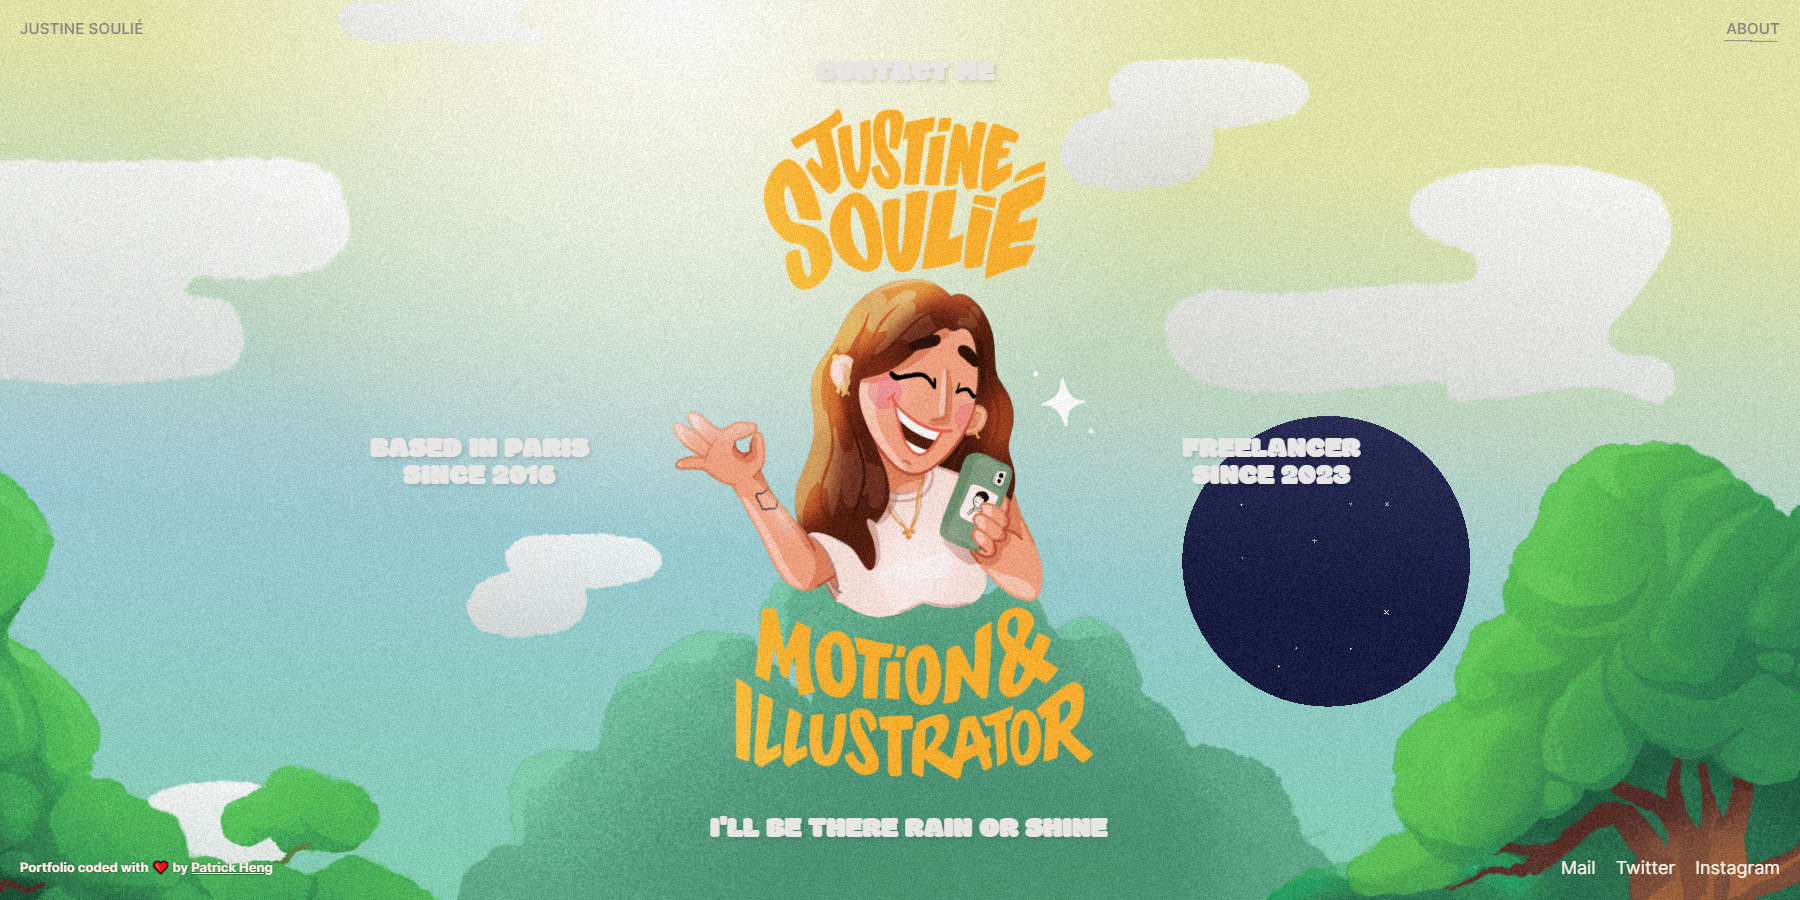 Justine Soulié Portfolio - Website of the Day